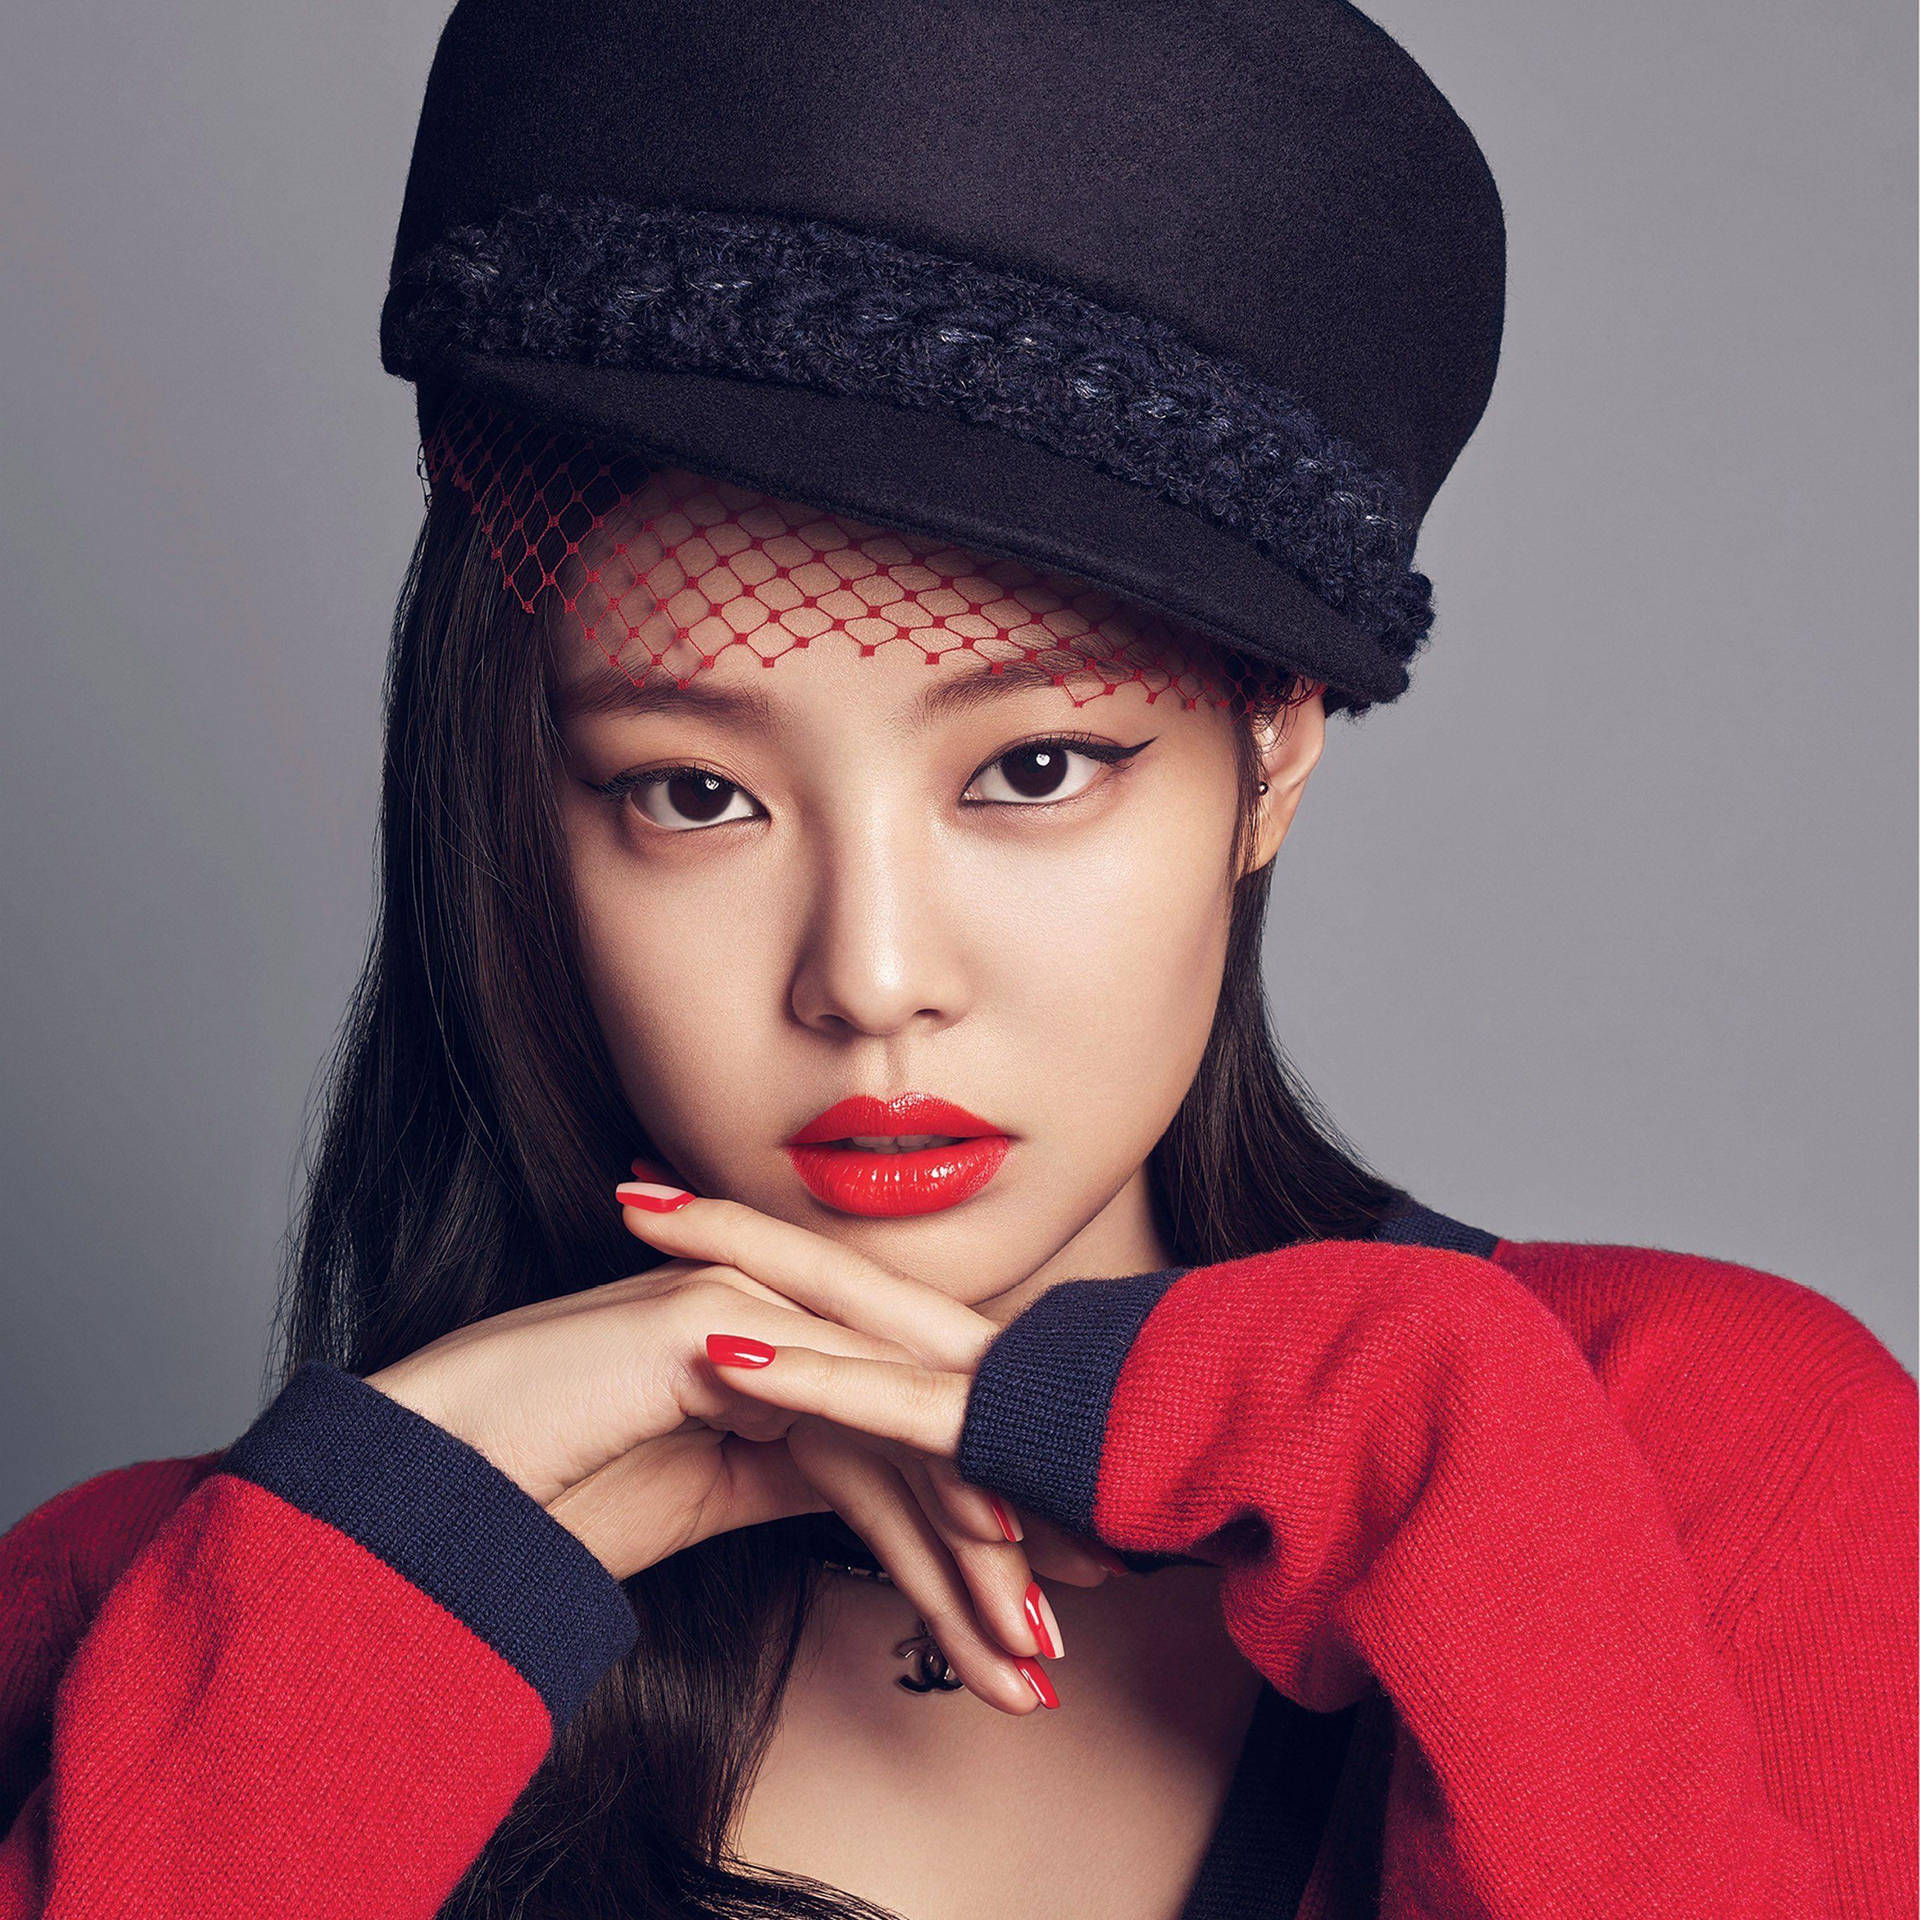 Jennie iført rød jakke og hat på sne Wallpaper